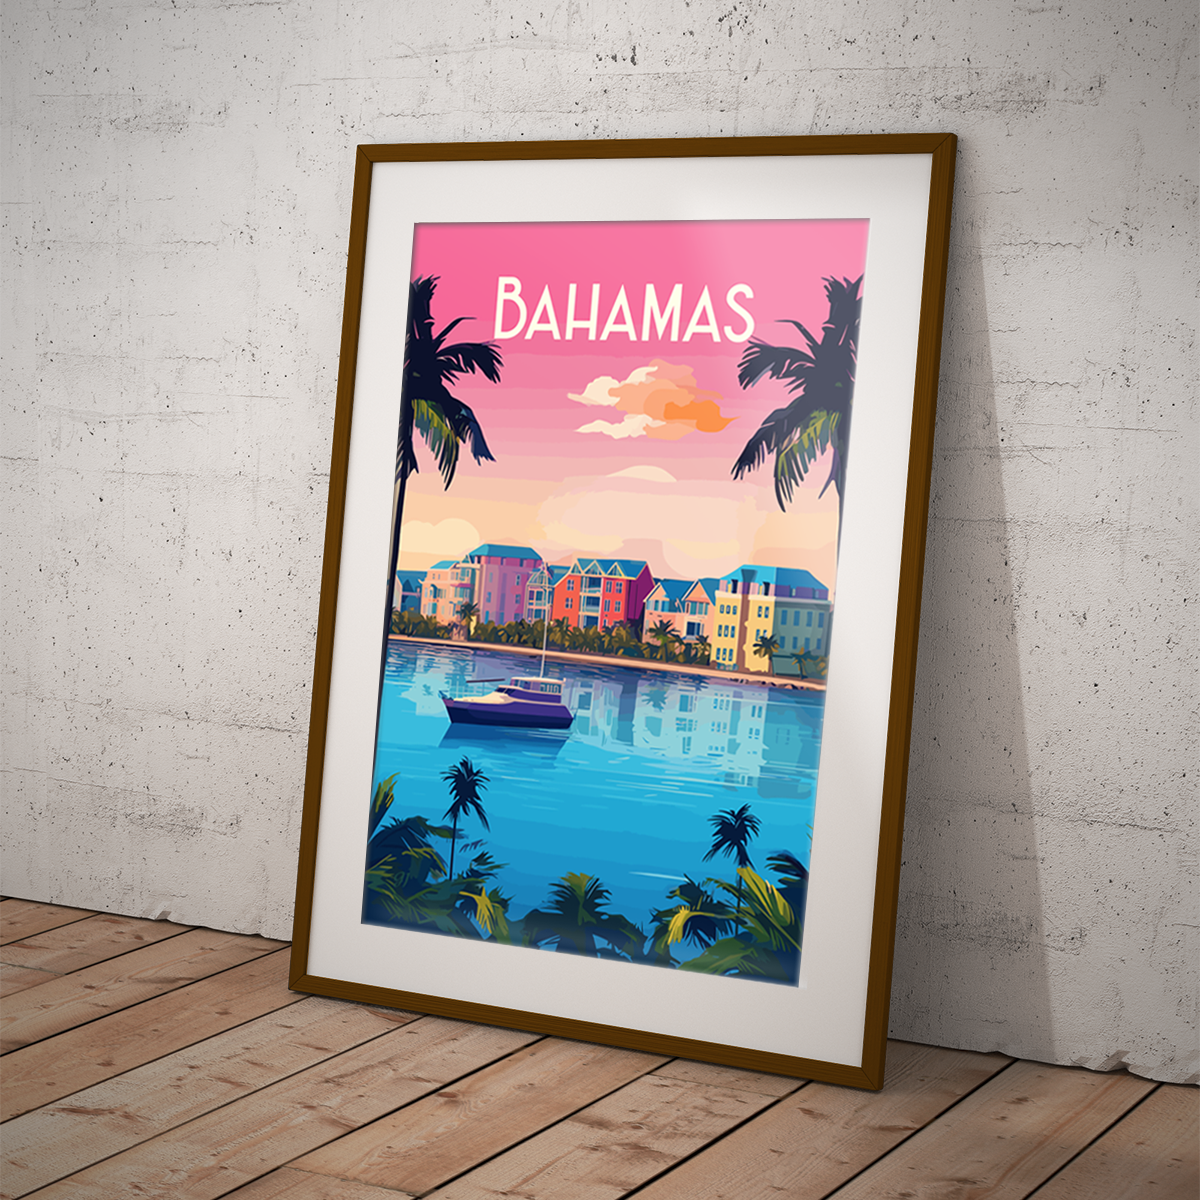 Bahamas poster by bon voyage design